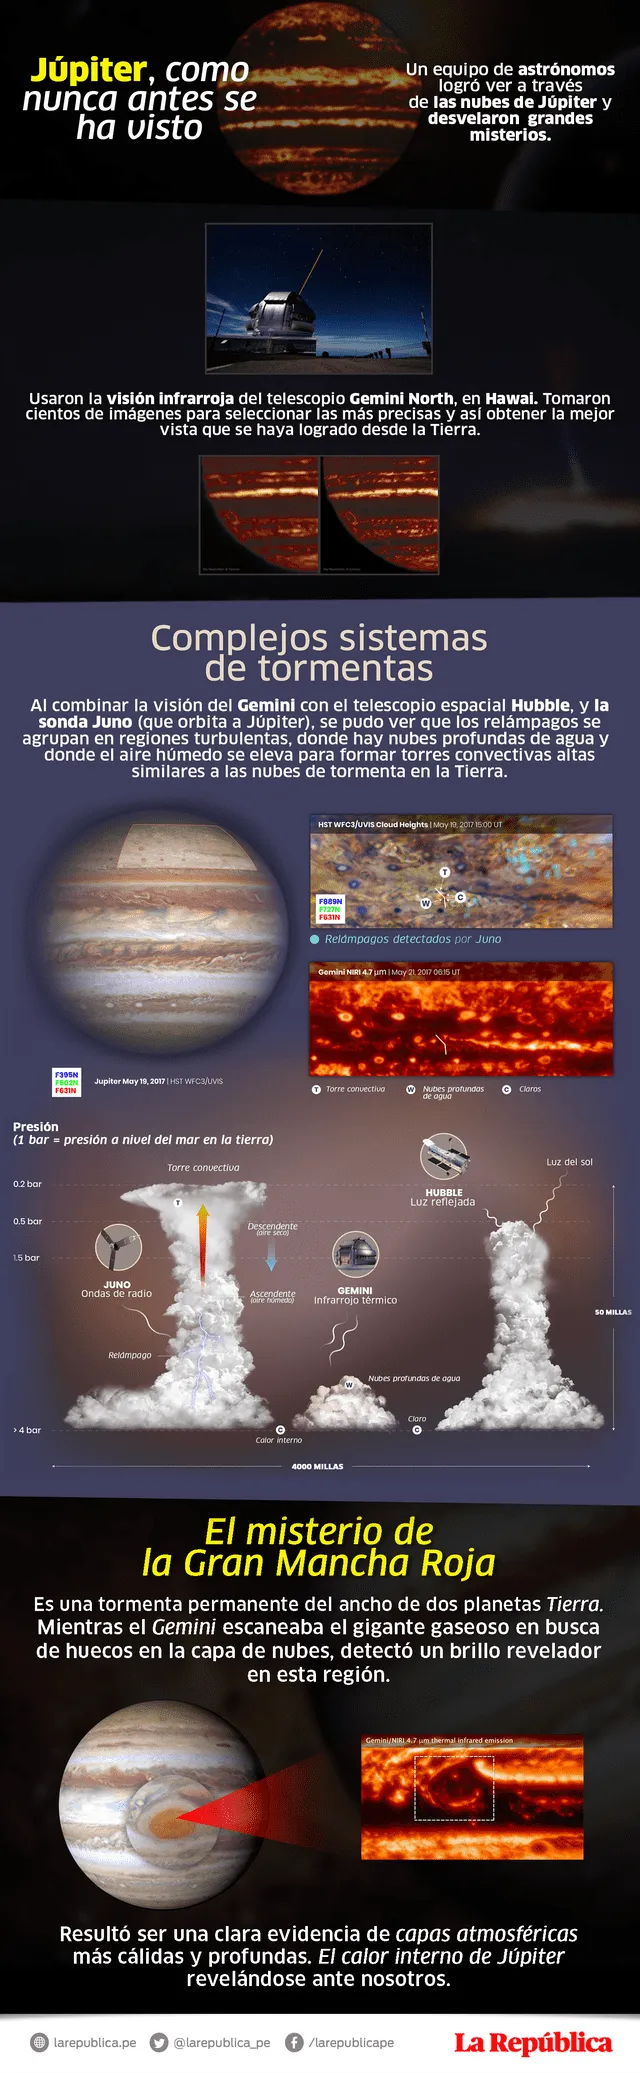 Infografía: Júpiter, como nunca antes se ha visto.